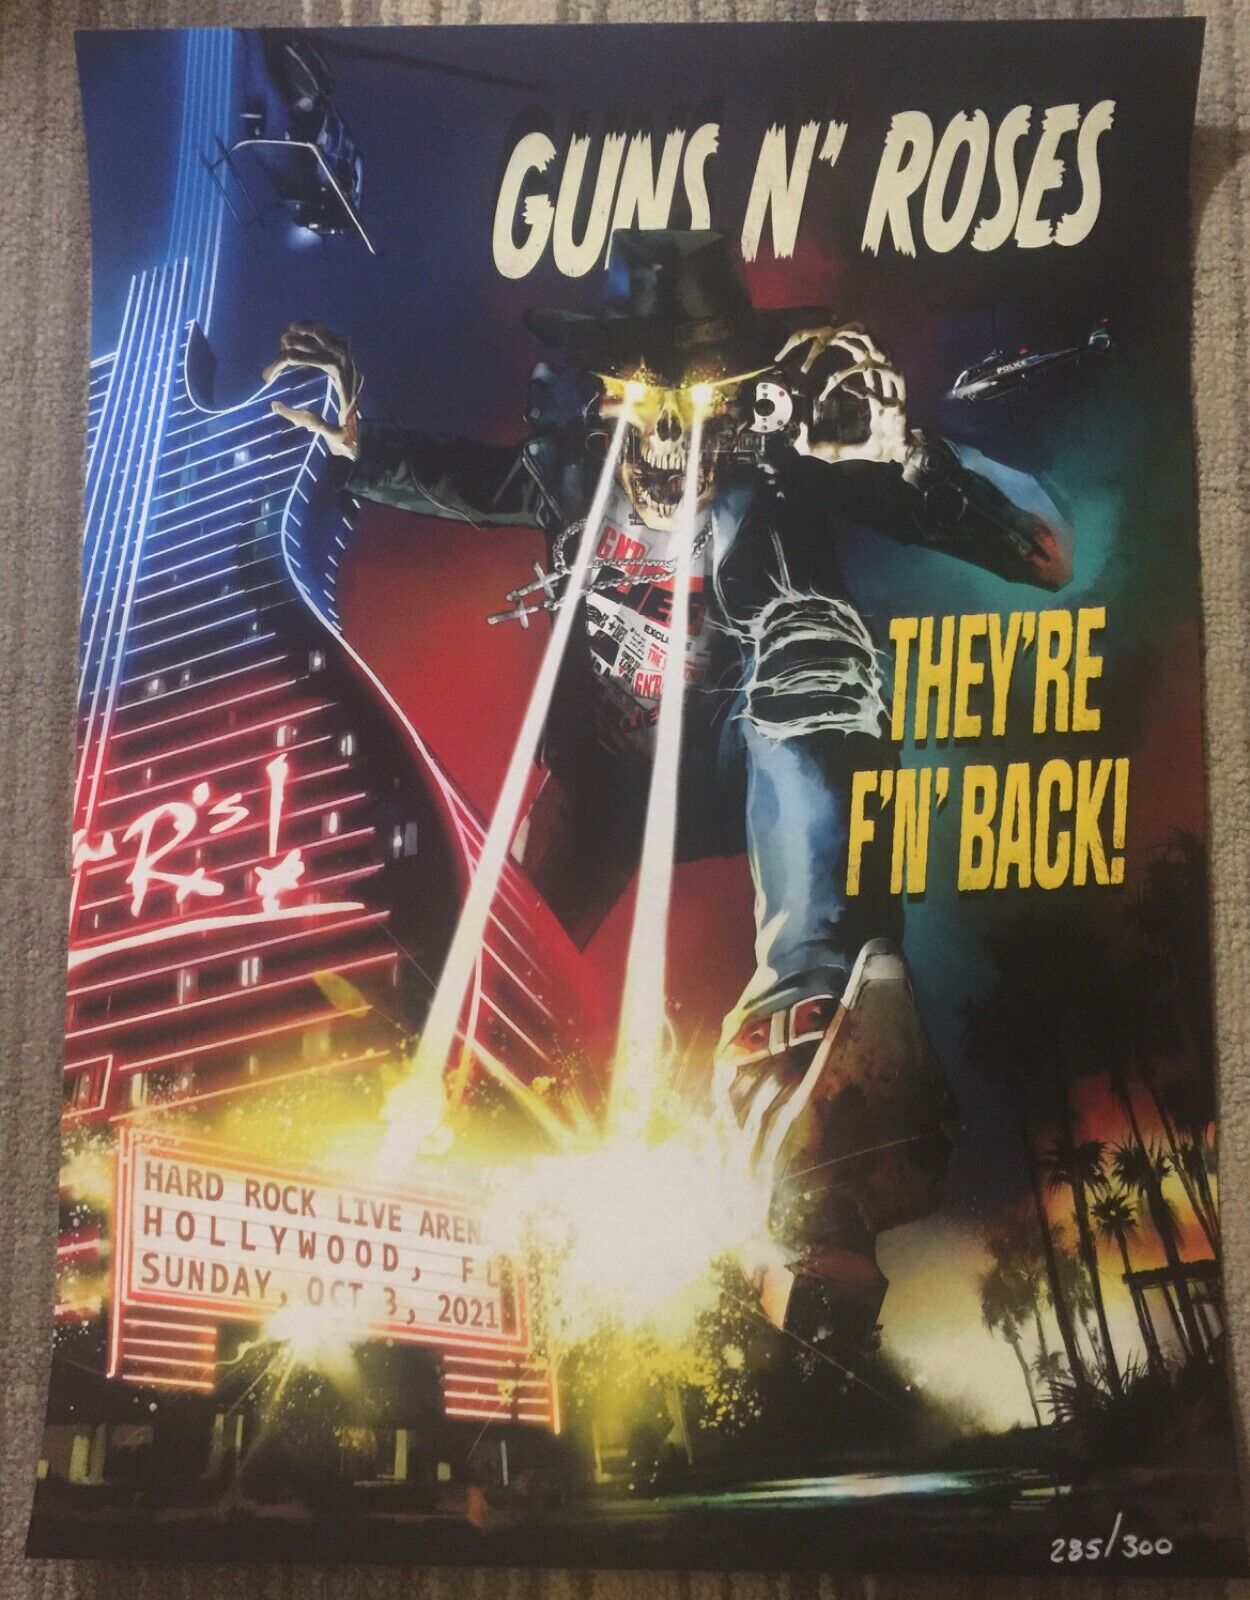 Guns N Roses Hard Rock Hollywood Florida Event Poster 10/3/21 285/300 Axl Rose